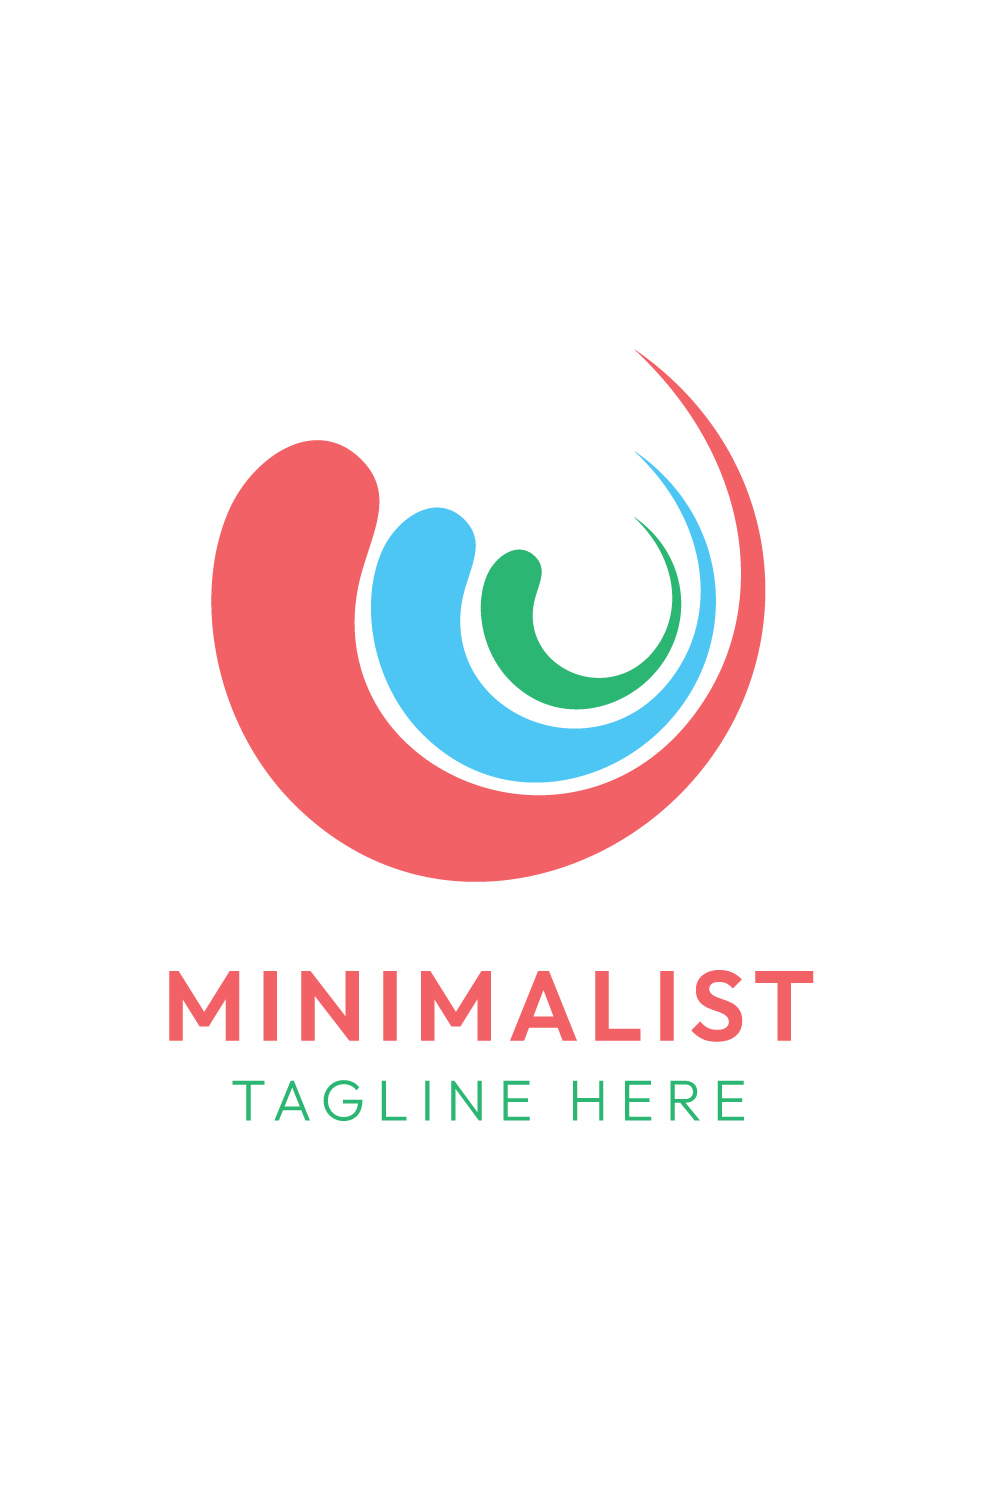 Ultimate Minimalist Logo Design Bundle – Master Collection pinterest preview image.